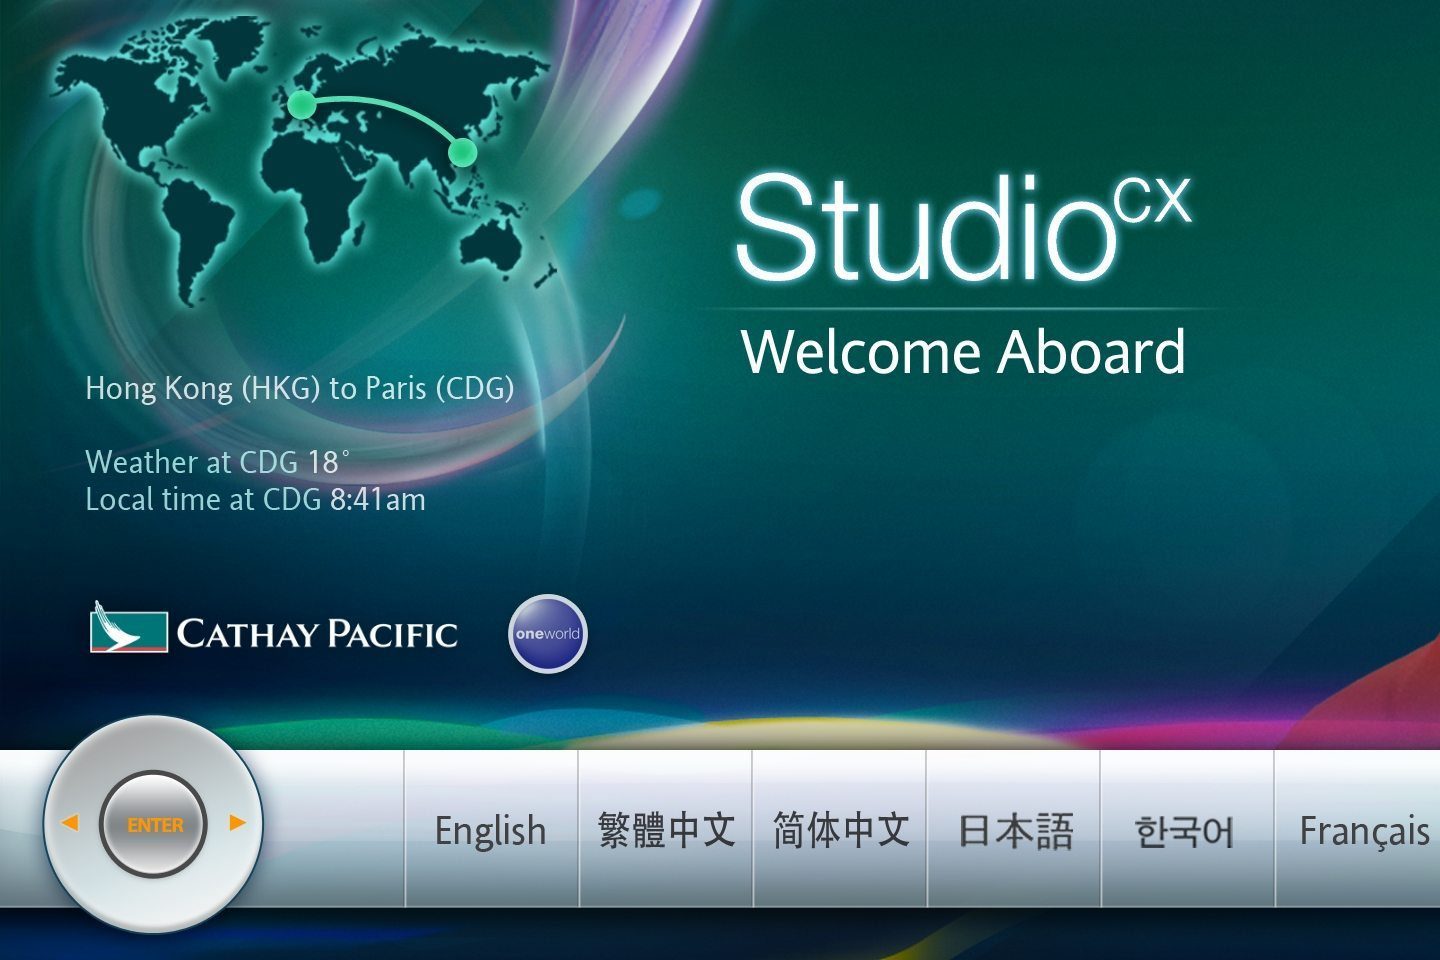 Cathay Pacific's Studio CX has a partnership with podcast company Gimlet Media. 